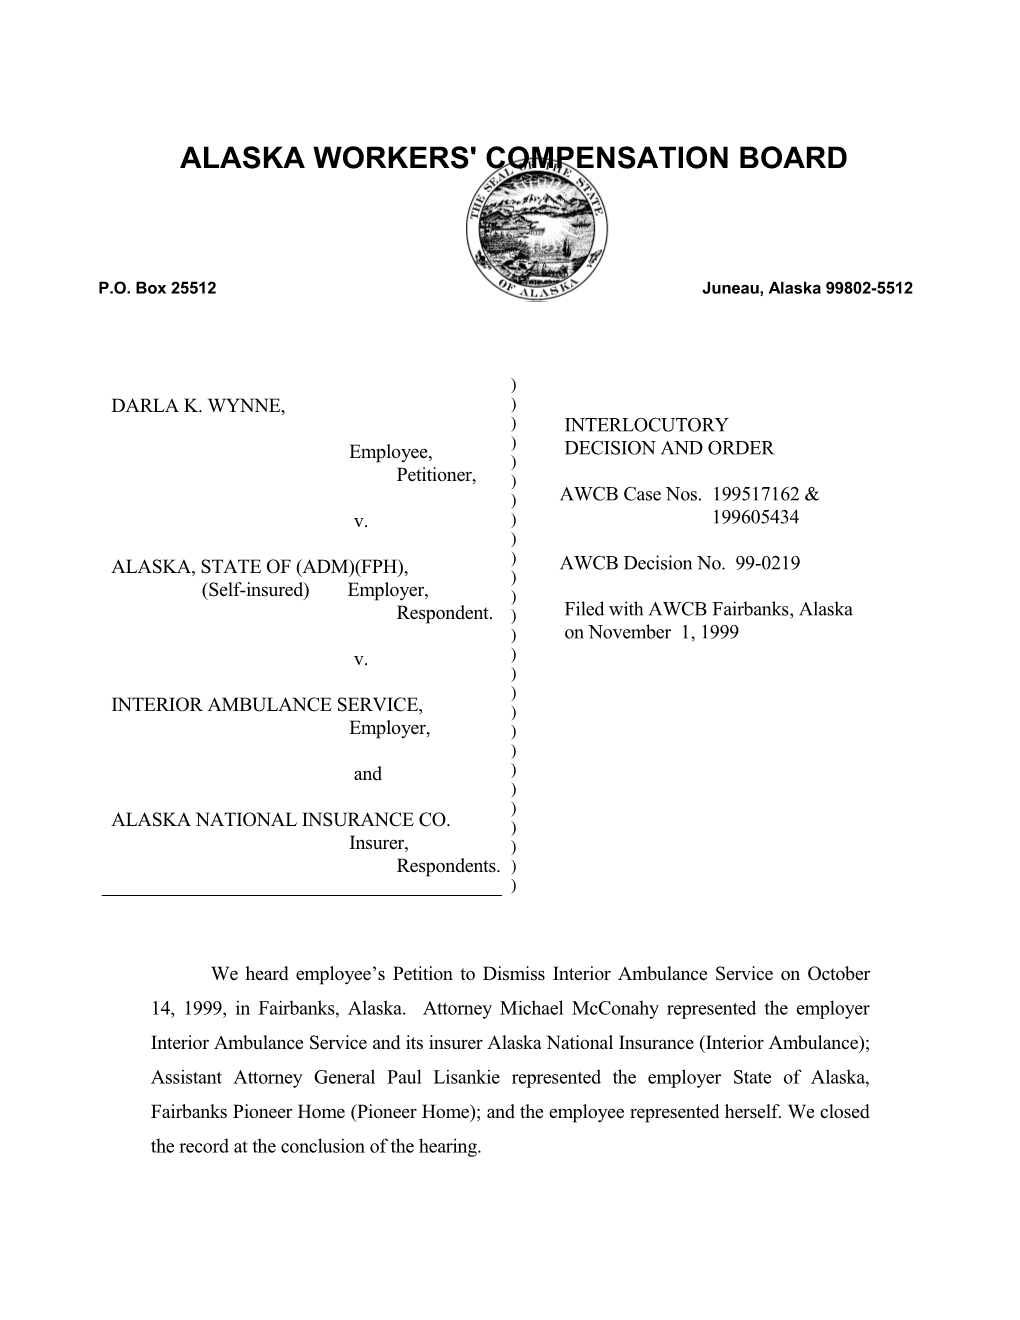 Alaska Workers' Compensation Board s70